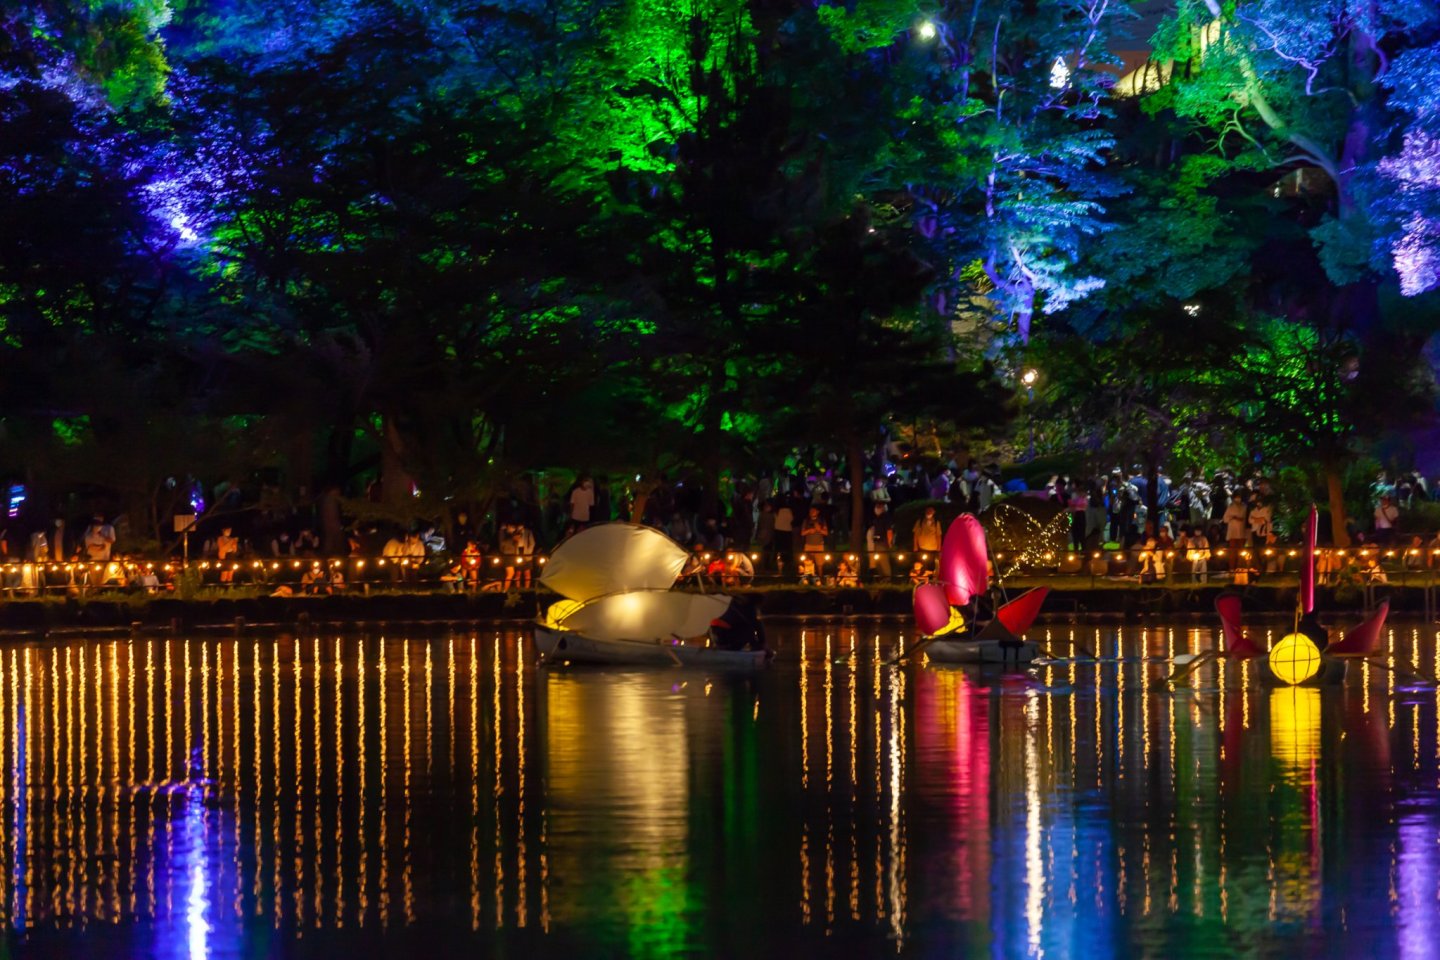 YohaS Night Art Festival at Chiba Park